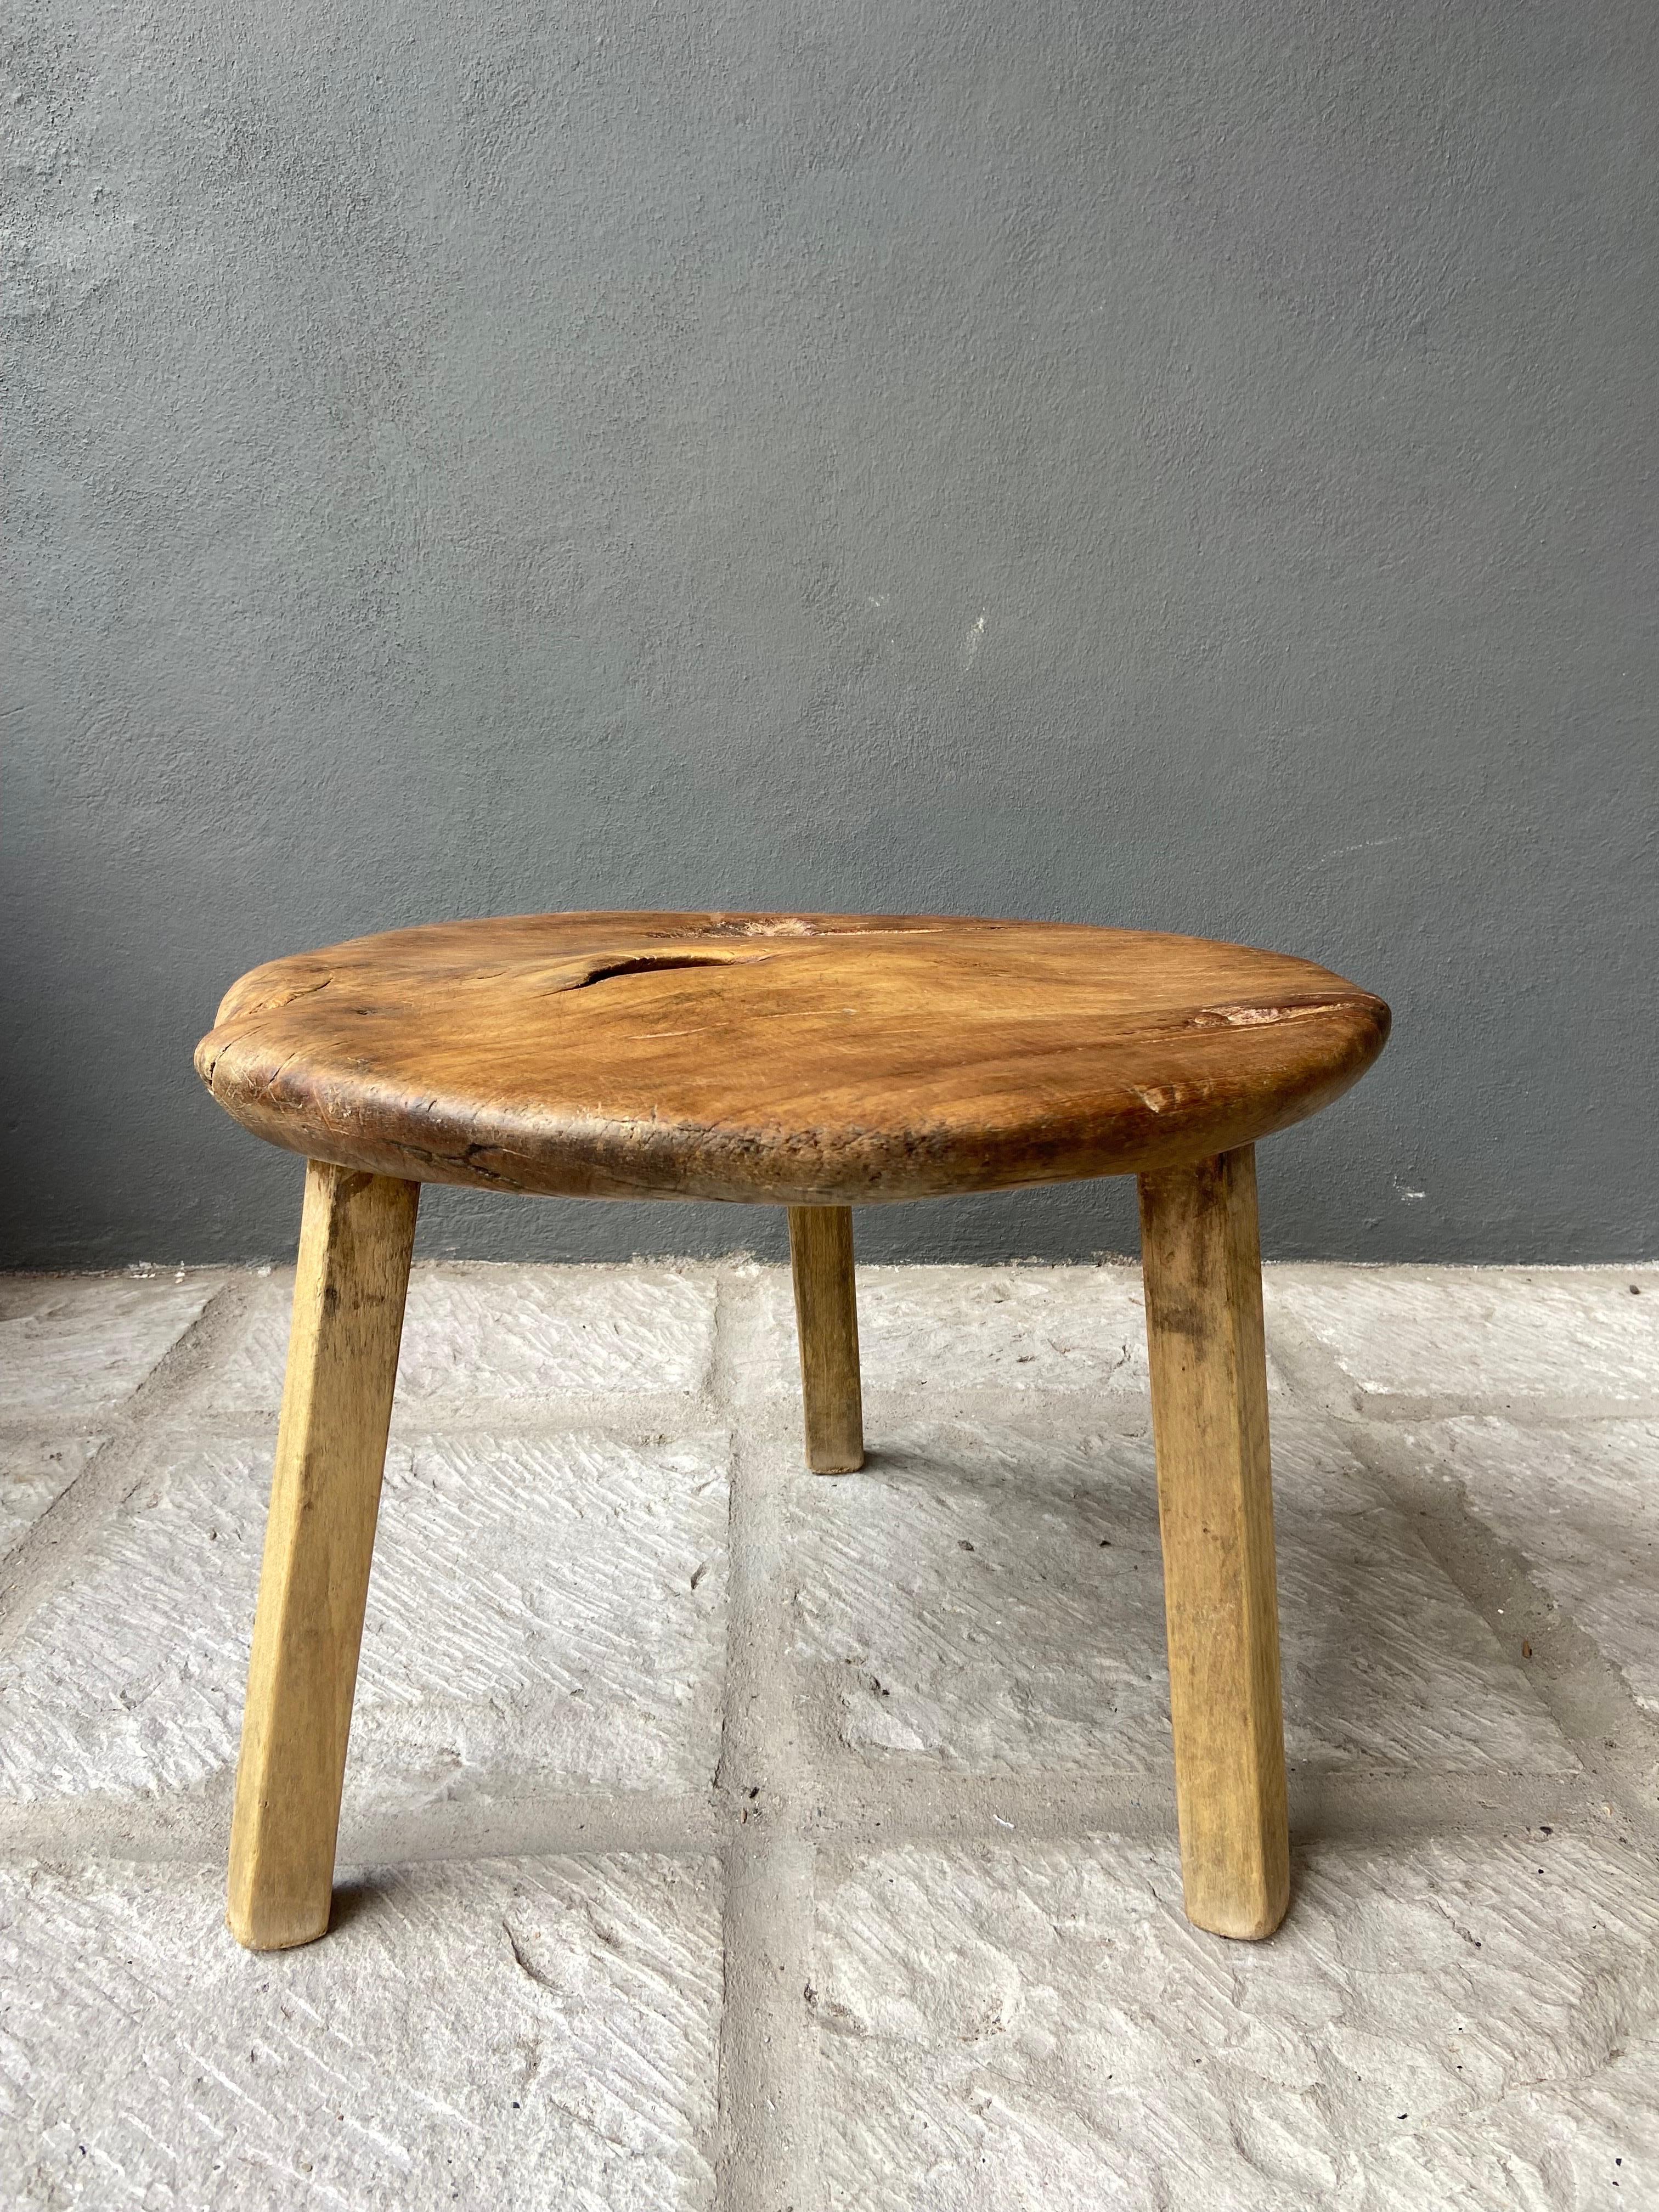 Primitive hardwood round table from Yucatan, Mexico, circa 1970´s